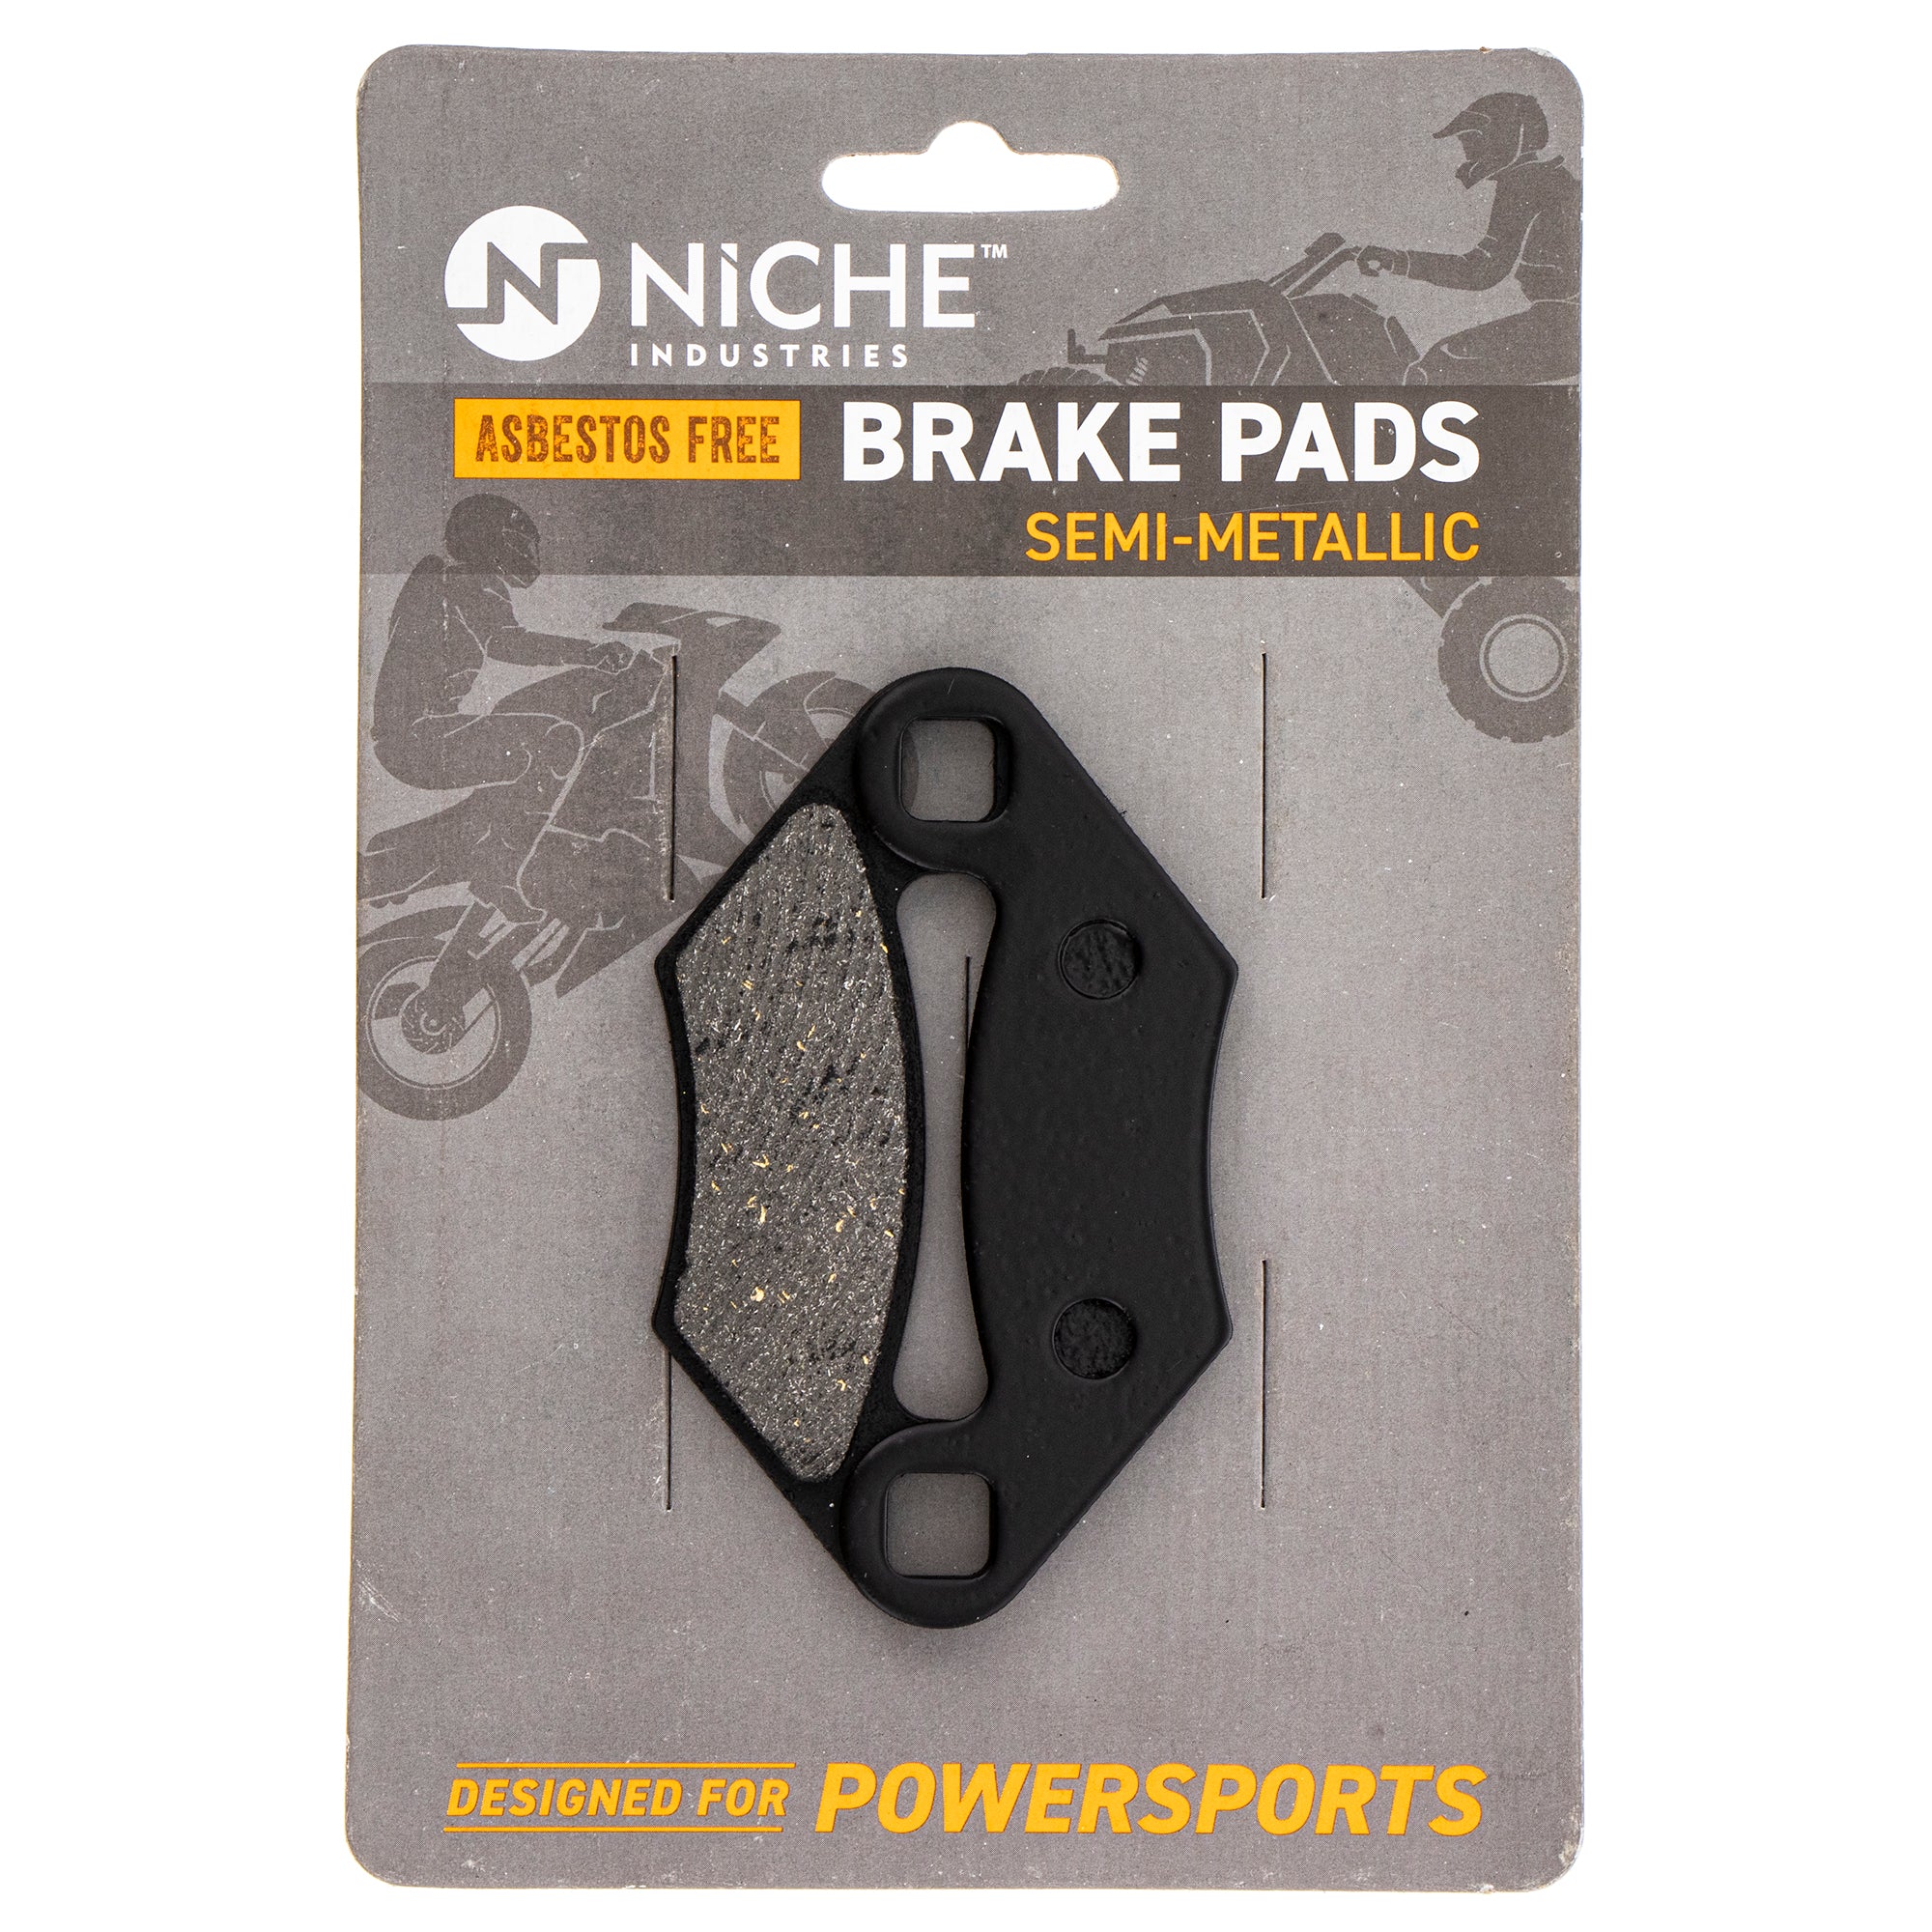 NICHE MK1001319 Brake Pad Set for Polaris Xpedition Trail